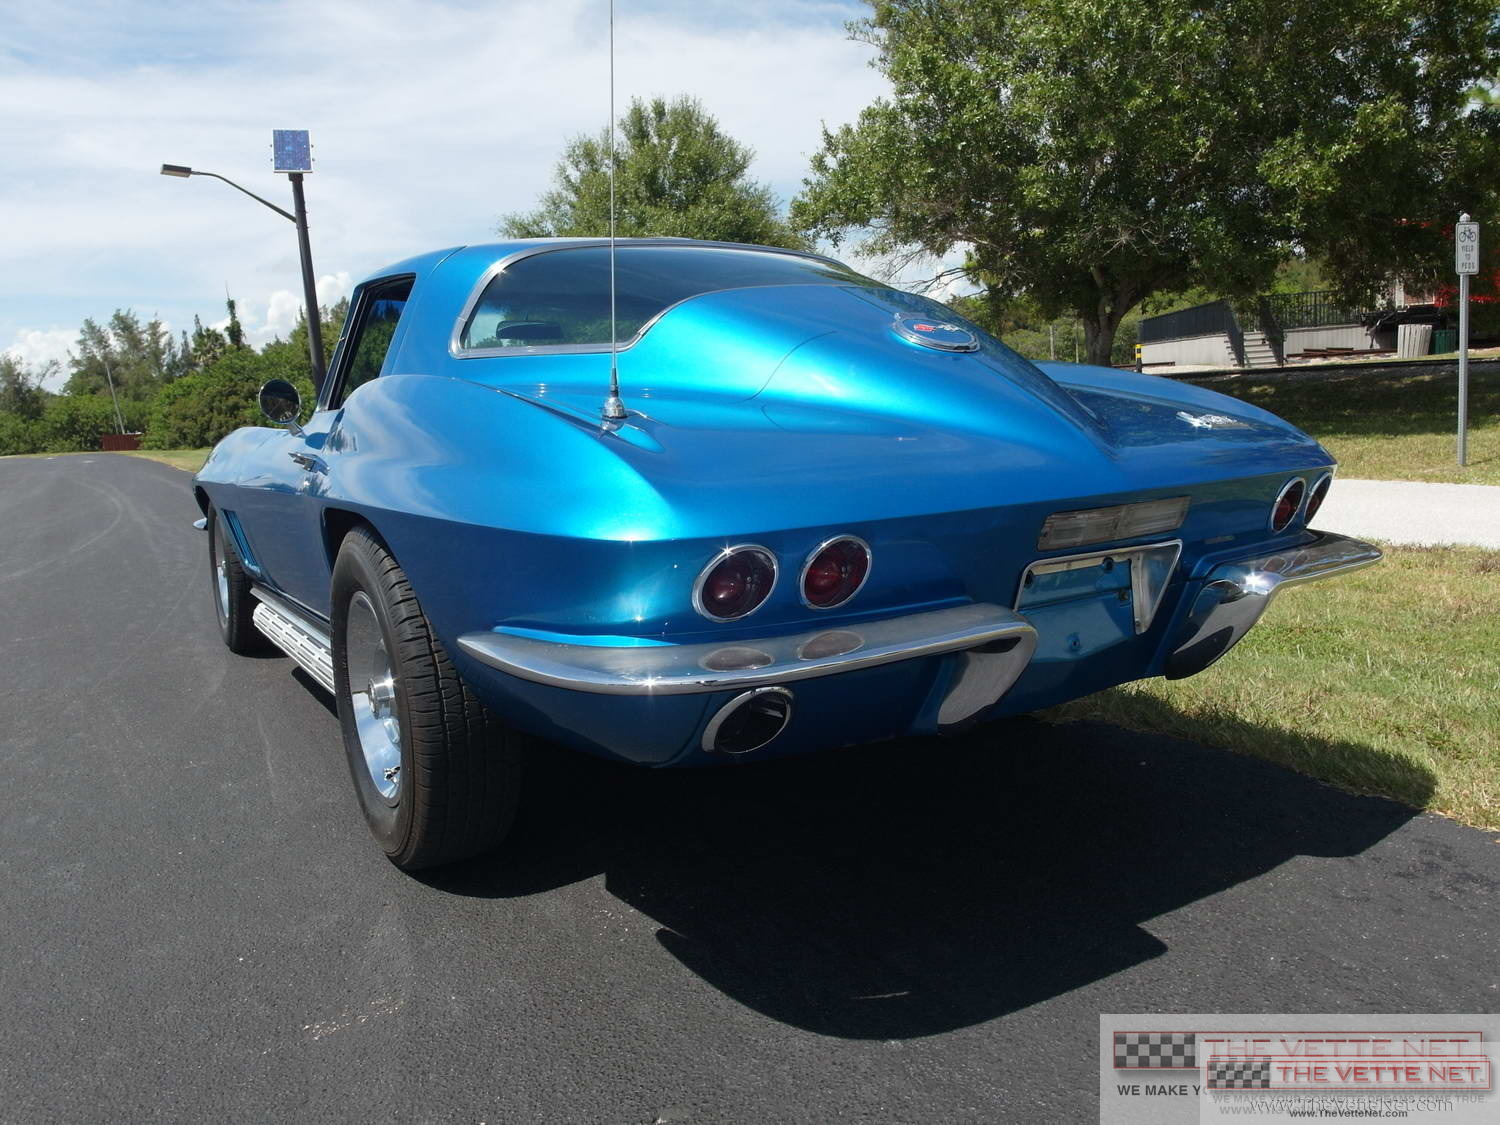 1967 Corvette Coupe Marina Blue